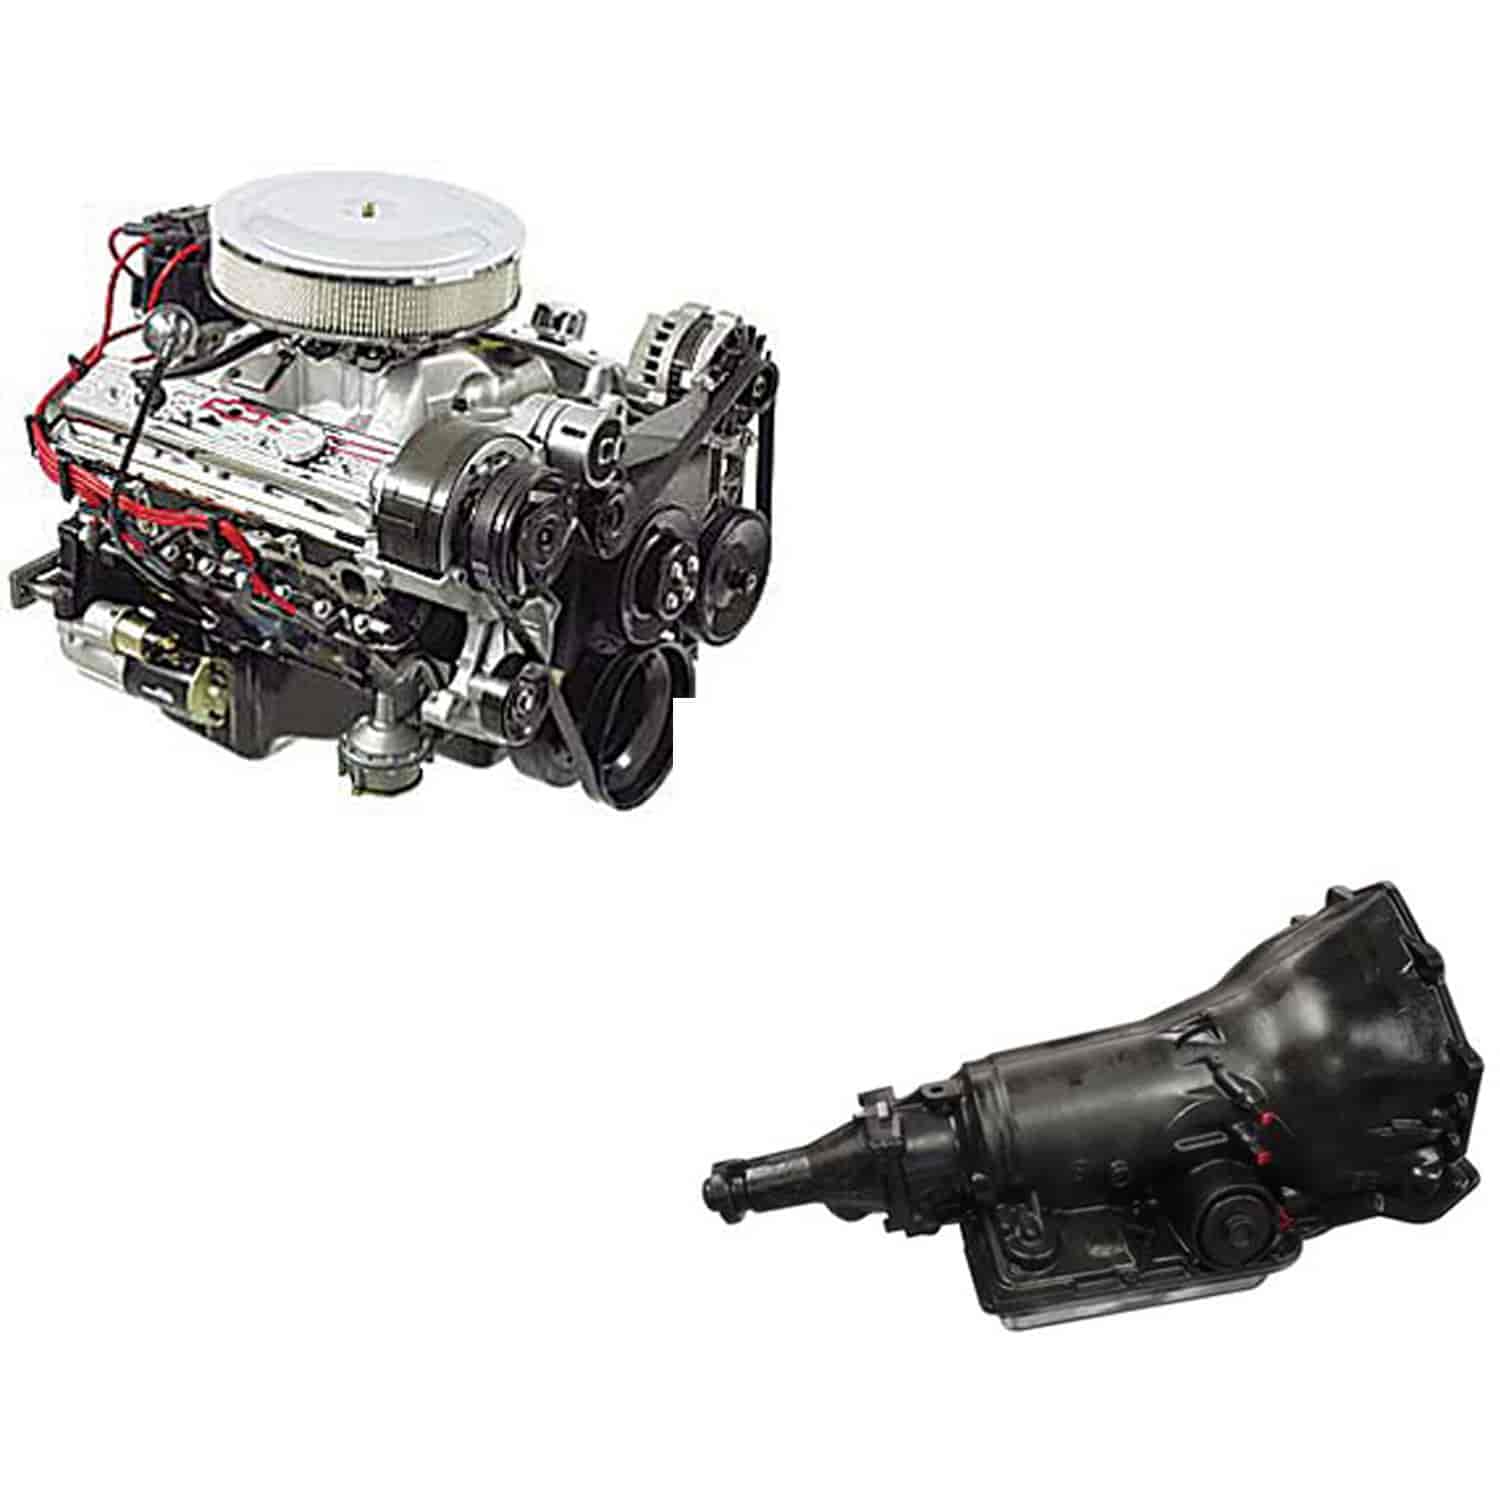 350 HO Turn-Key Engine and 700R4 Trans Kit